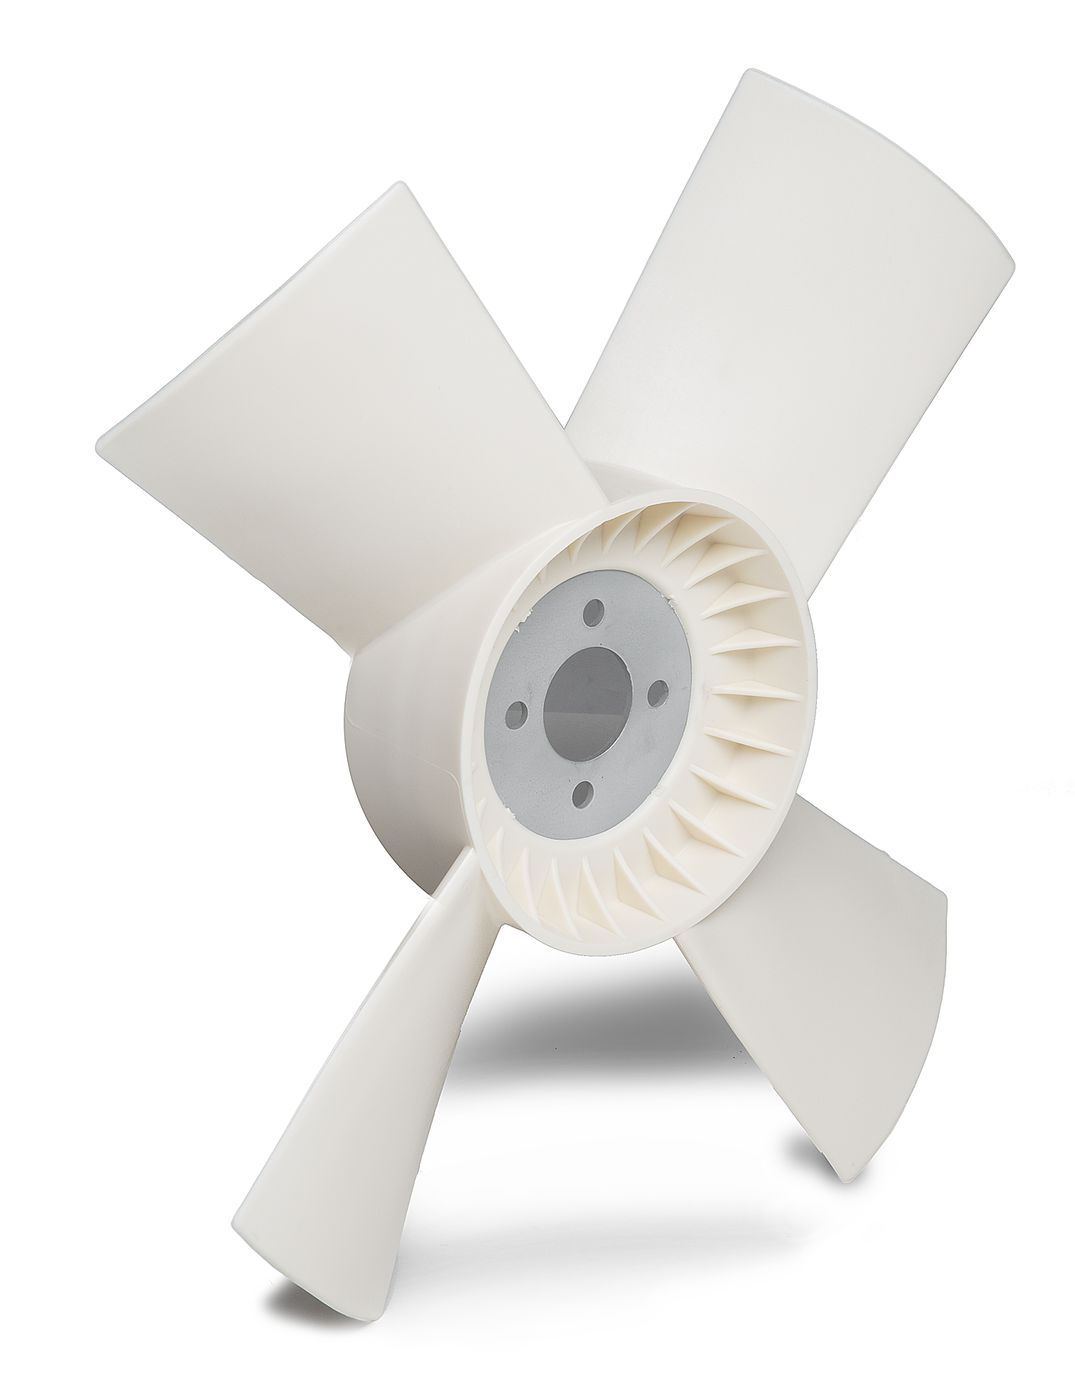 Lüfterflügel
Fan blade
Ventilateur
Koelvin
Aspas del ventilado